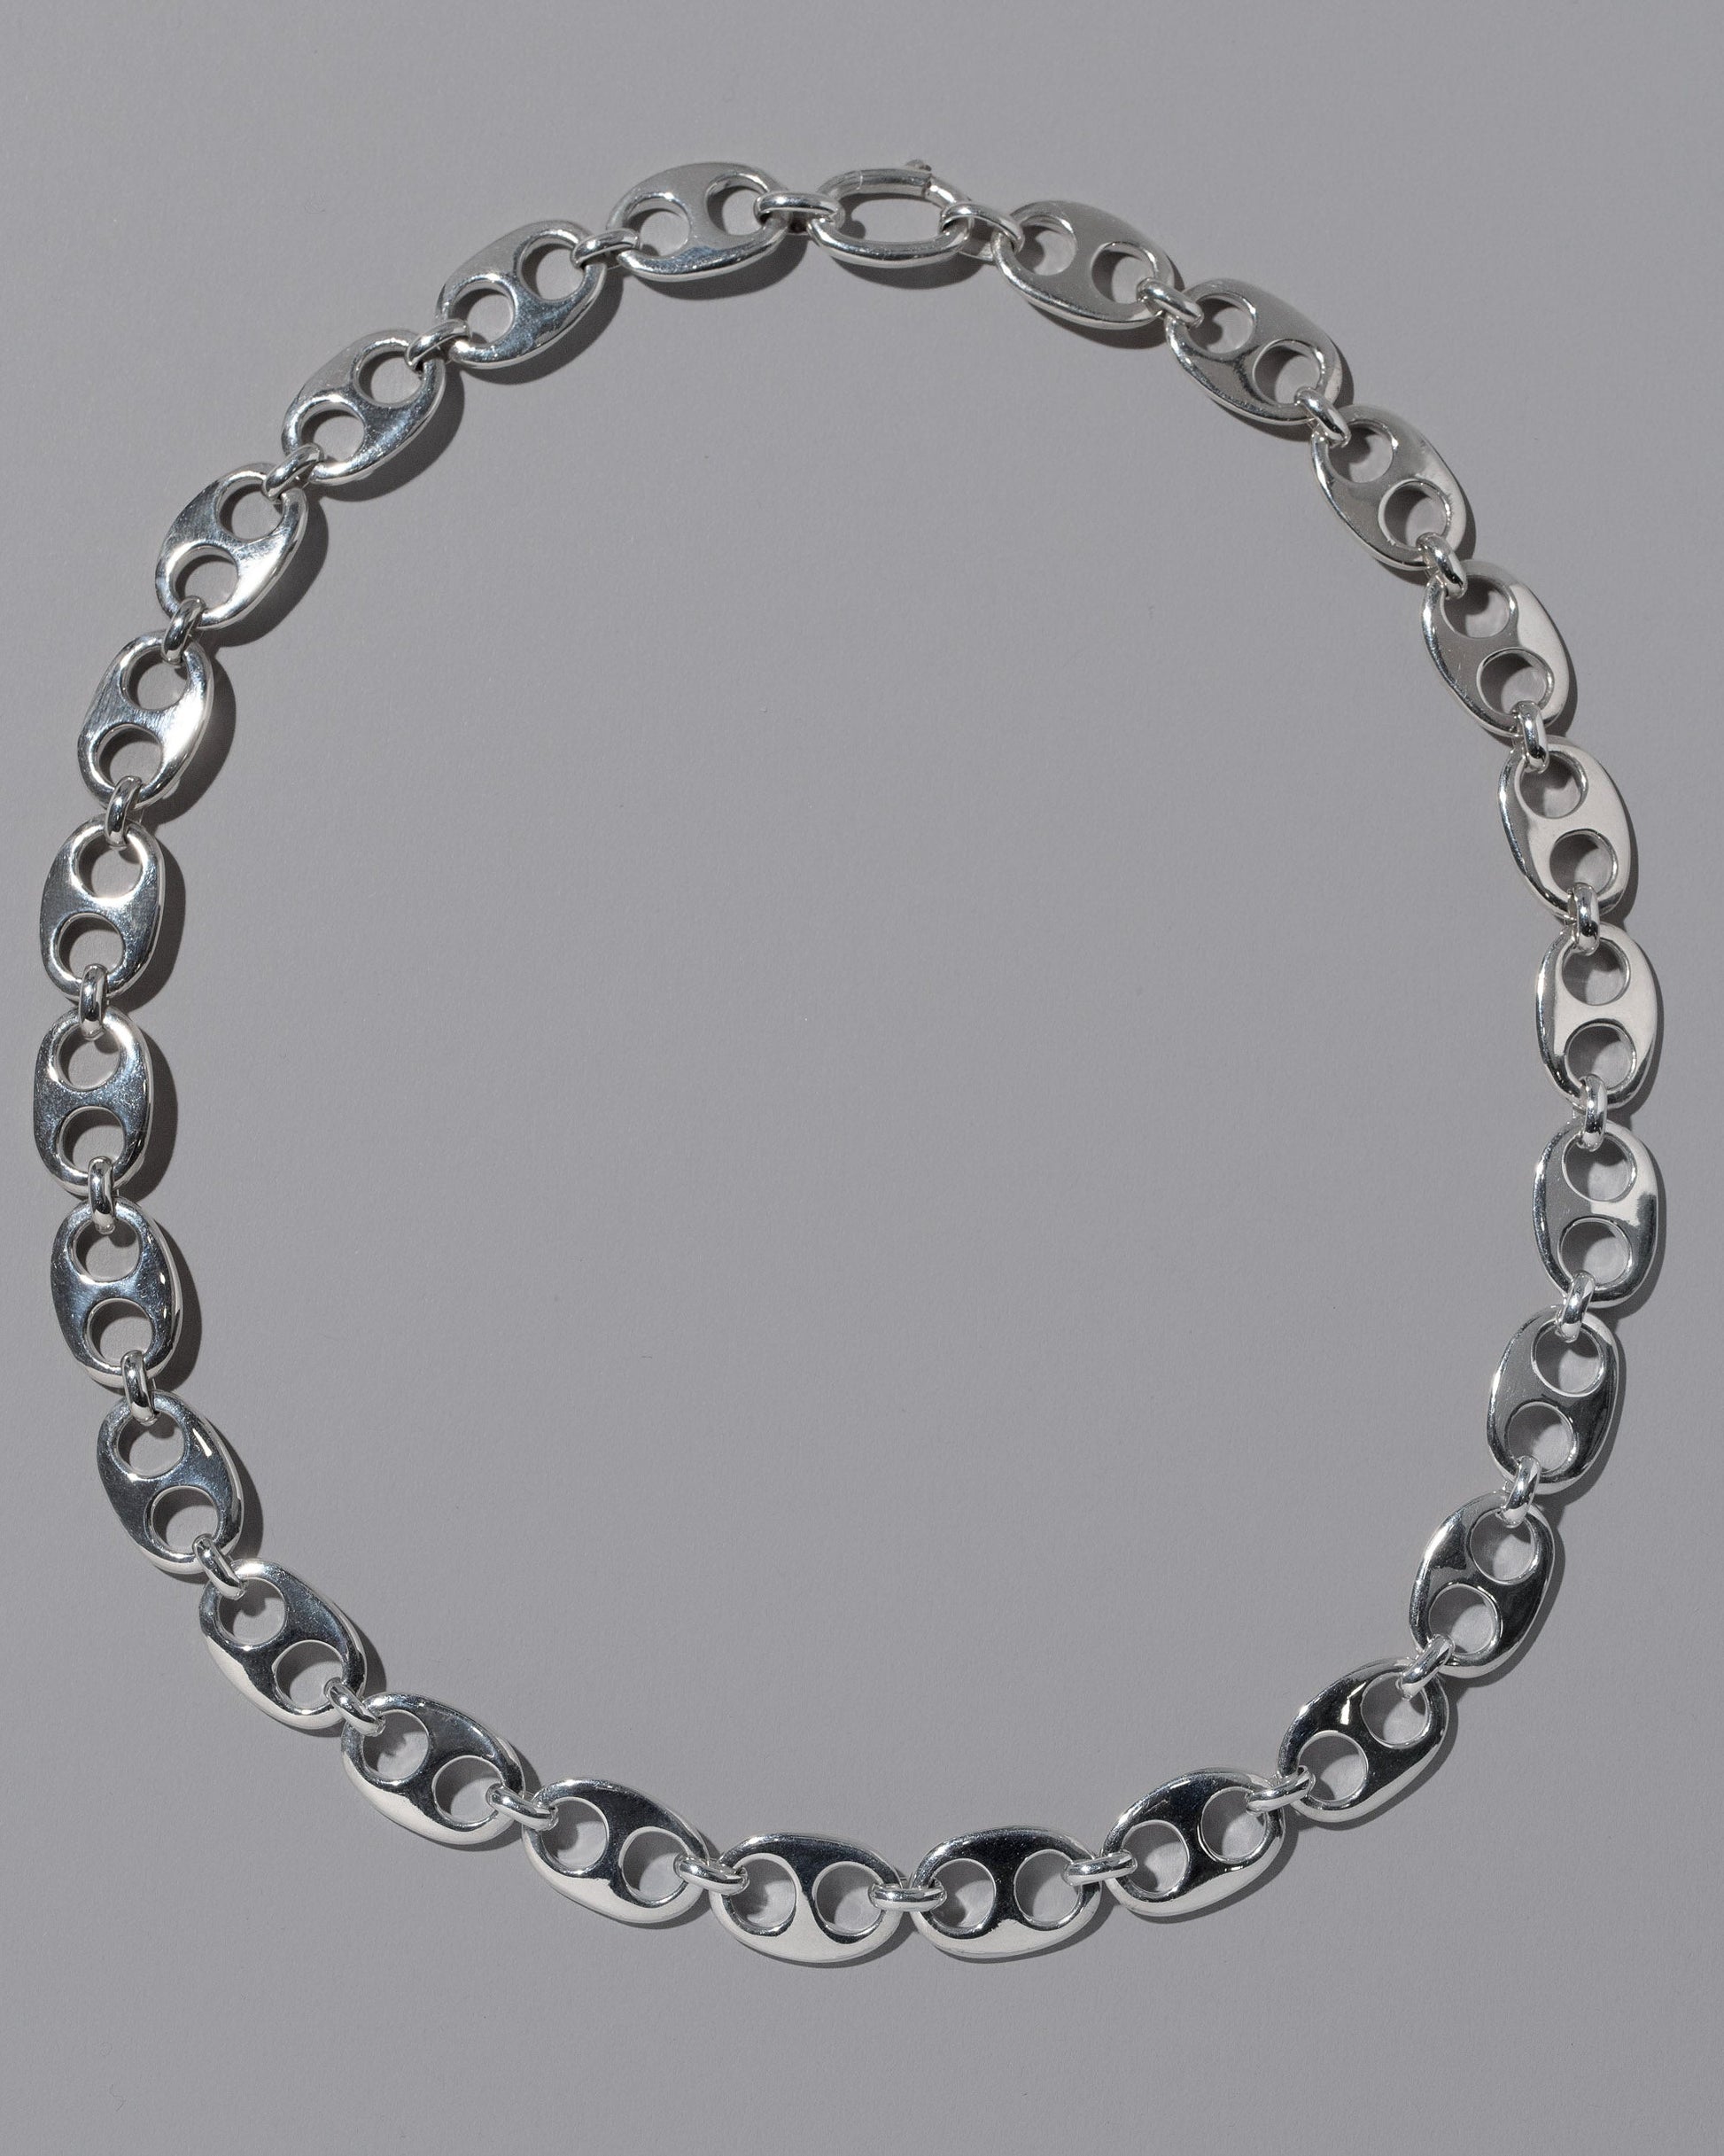 CRZM Sterling Silver Yuba Medium Necklace on light color background.